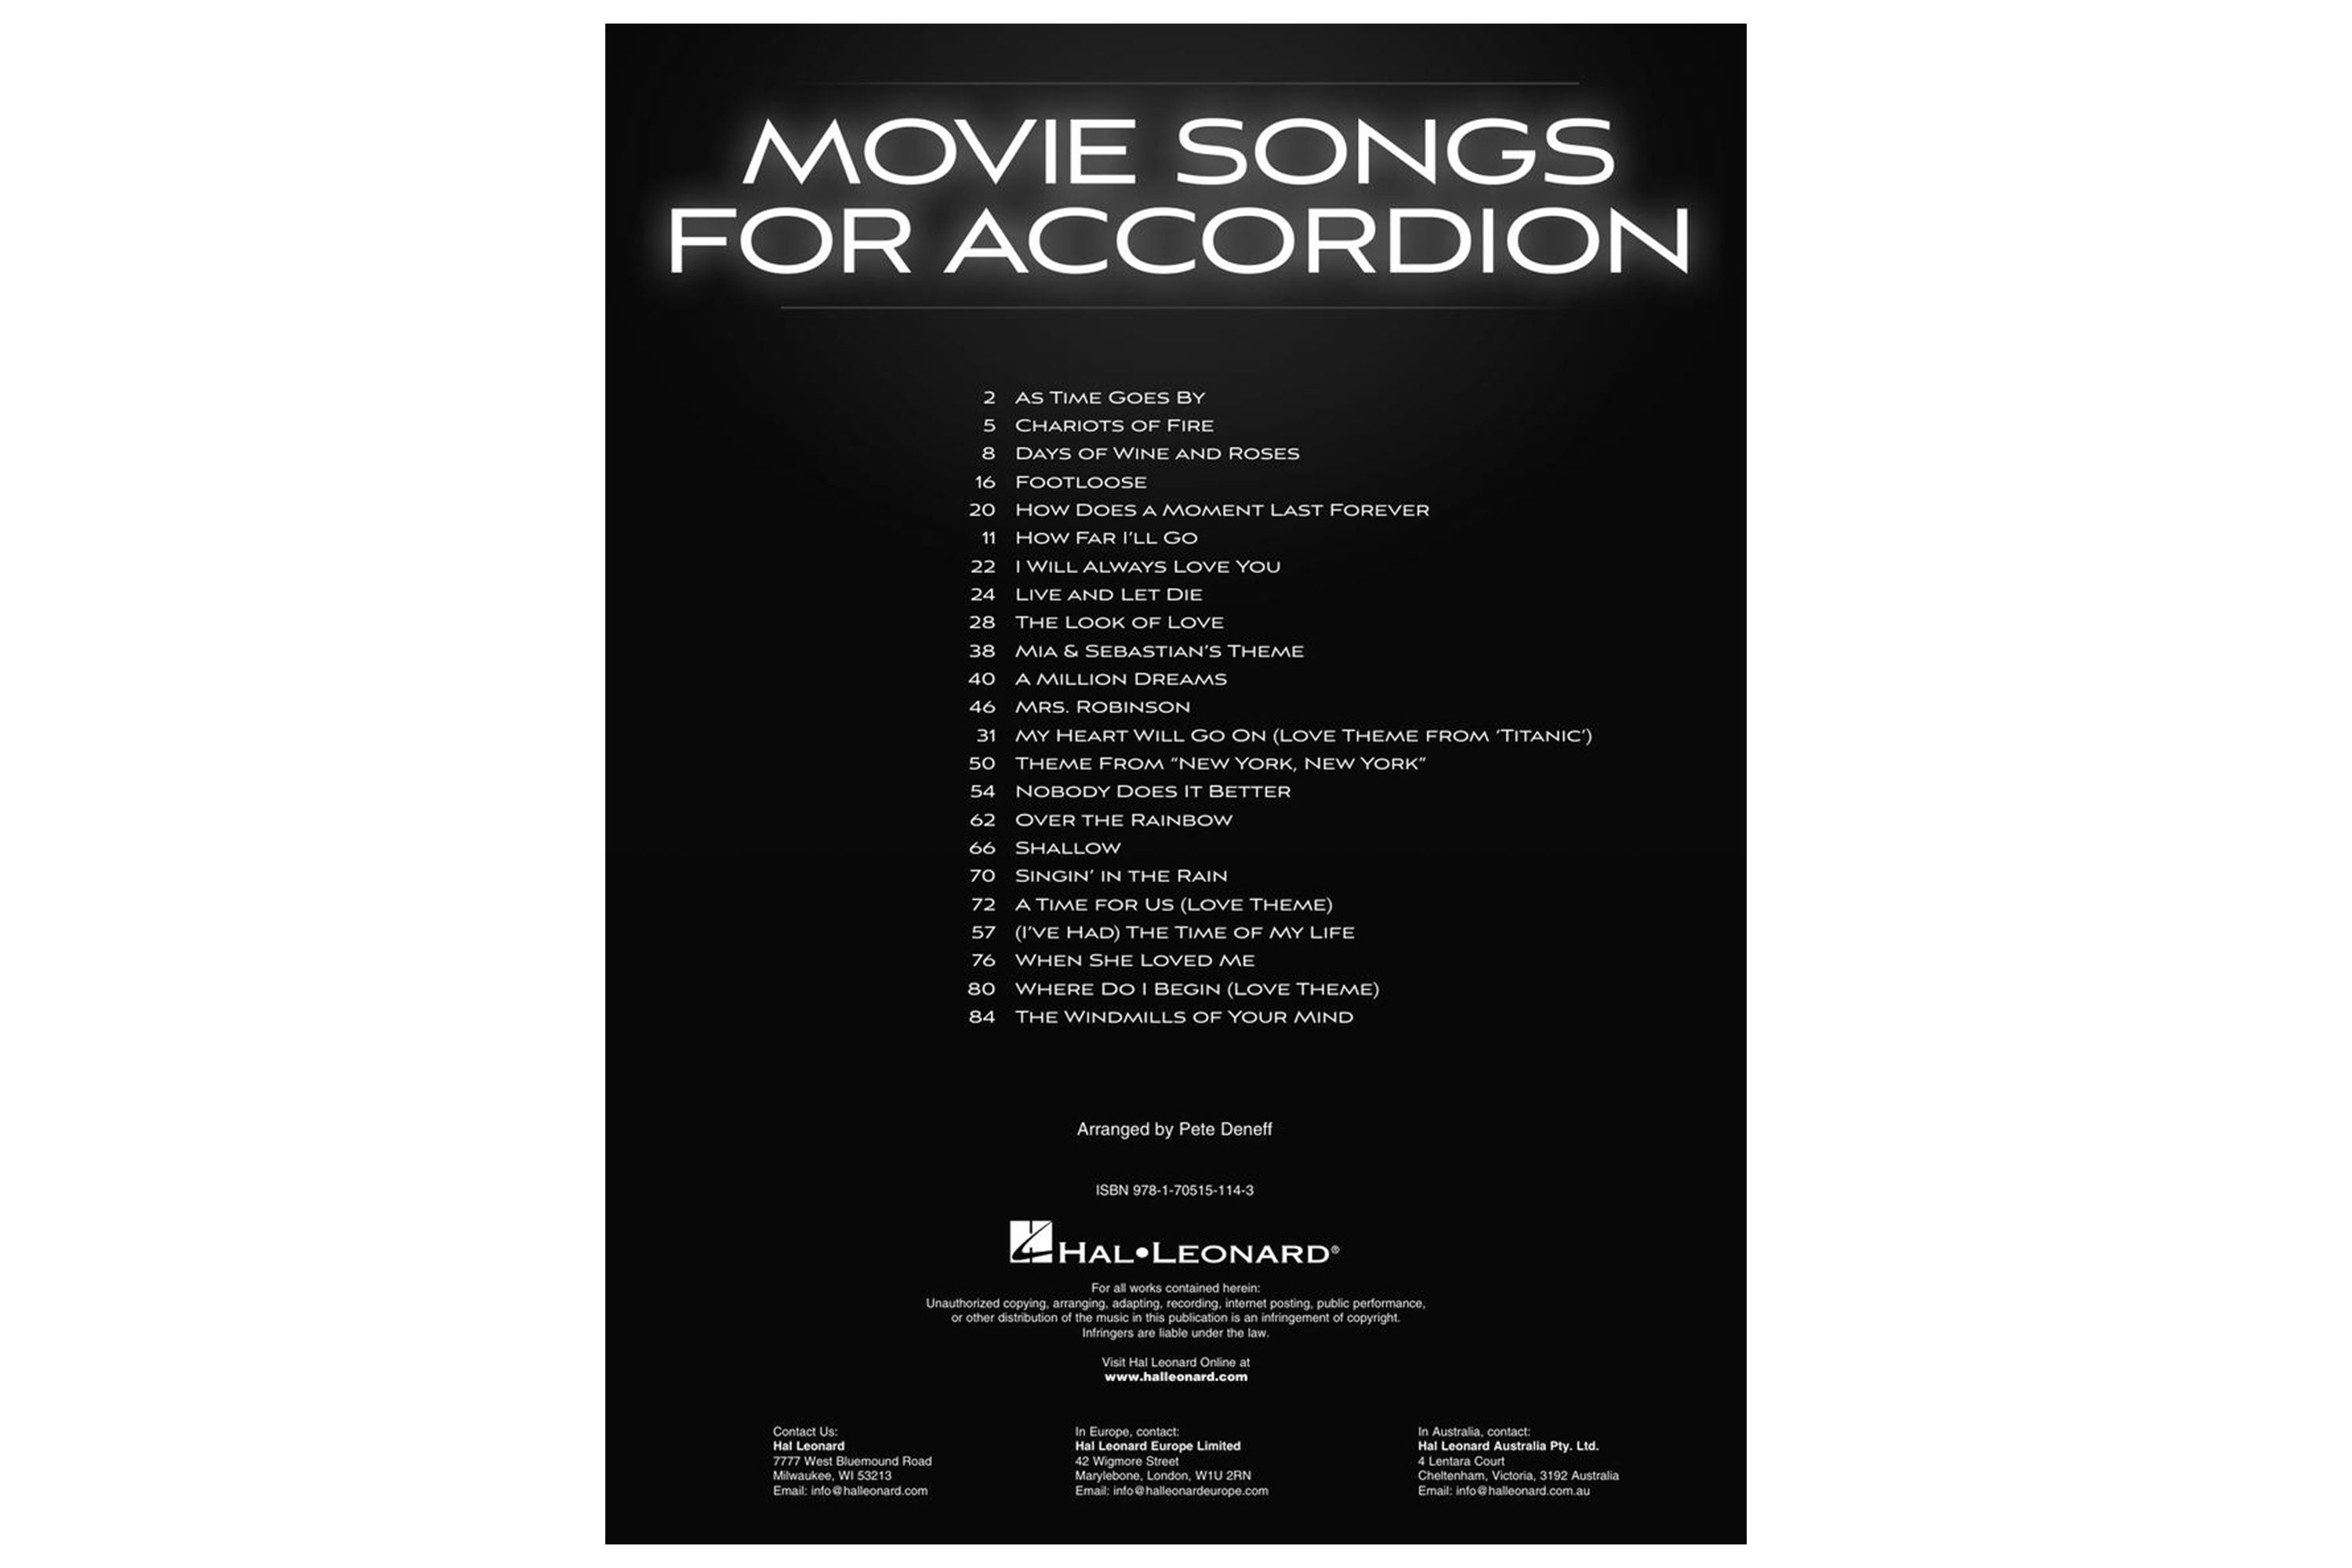 Hal Leonard Movie Songs For Accordion